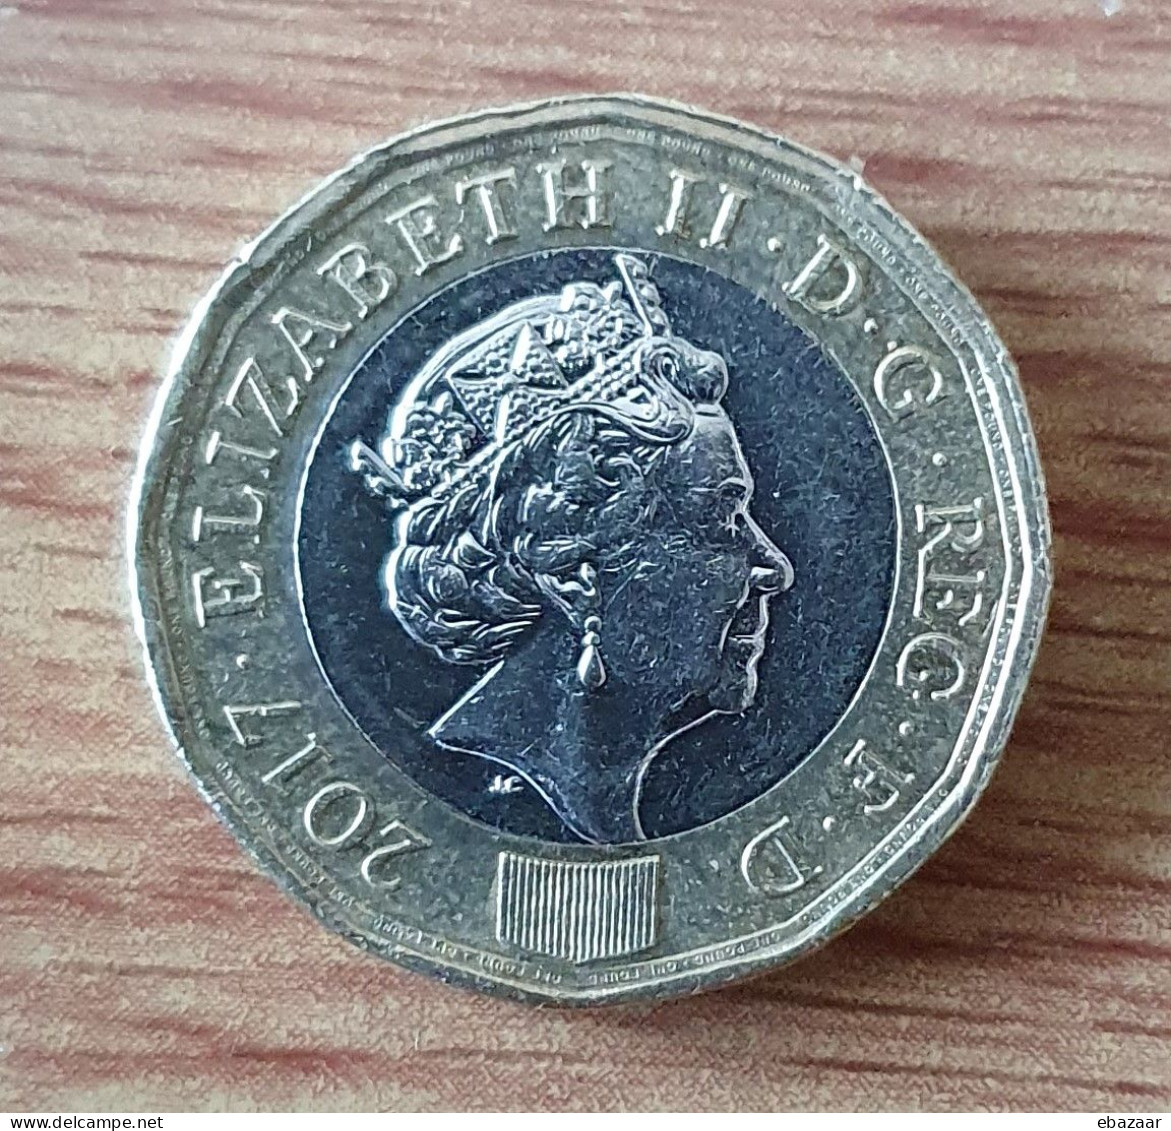 Great Britain 2017 United Kingdom Of England H.M. Queen Elizabeth II - One Pound Coin UK - 1 Pound